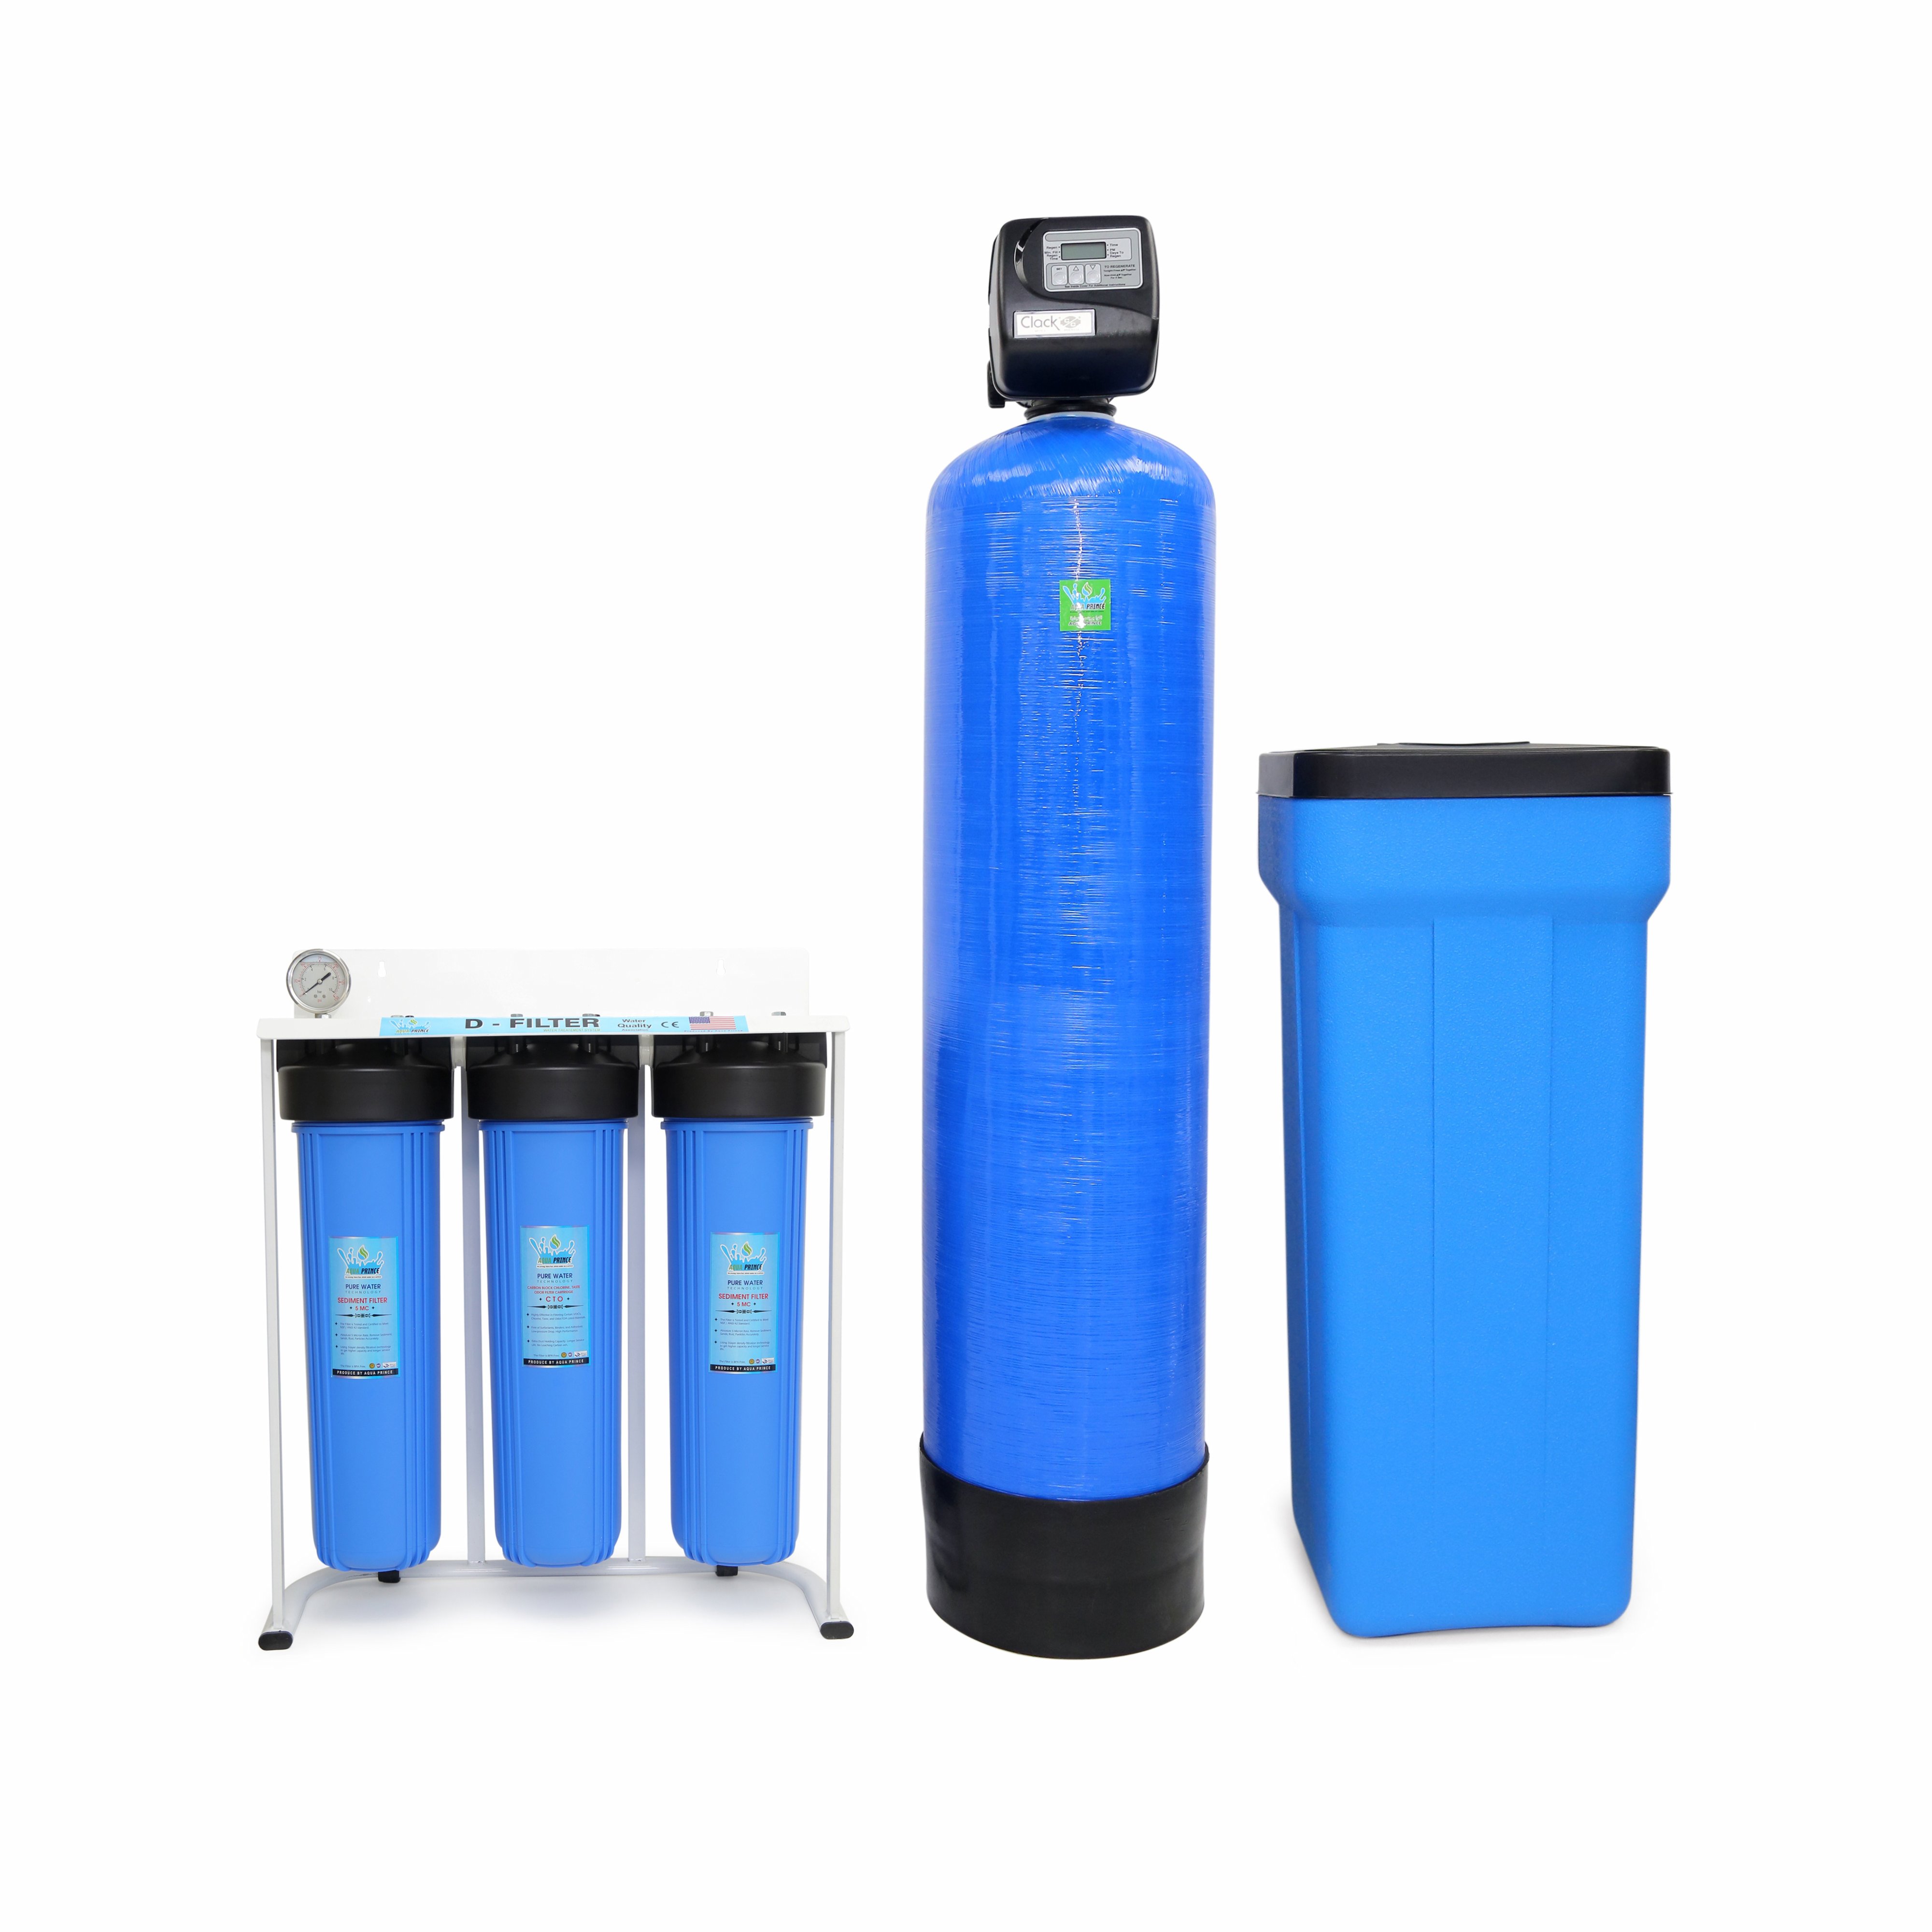 3-Stage Jumbo Filter & Water Softener